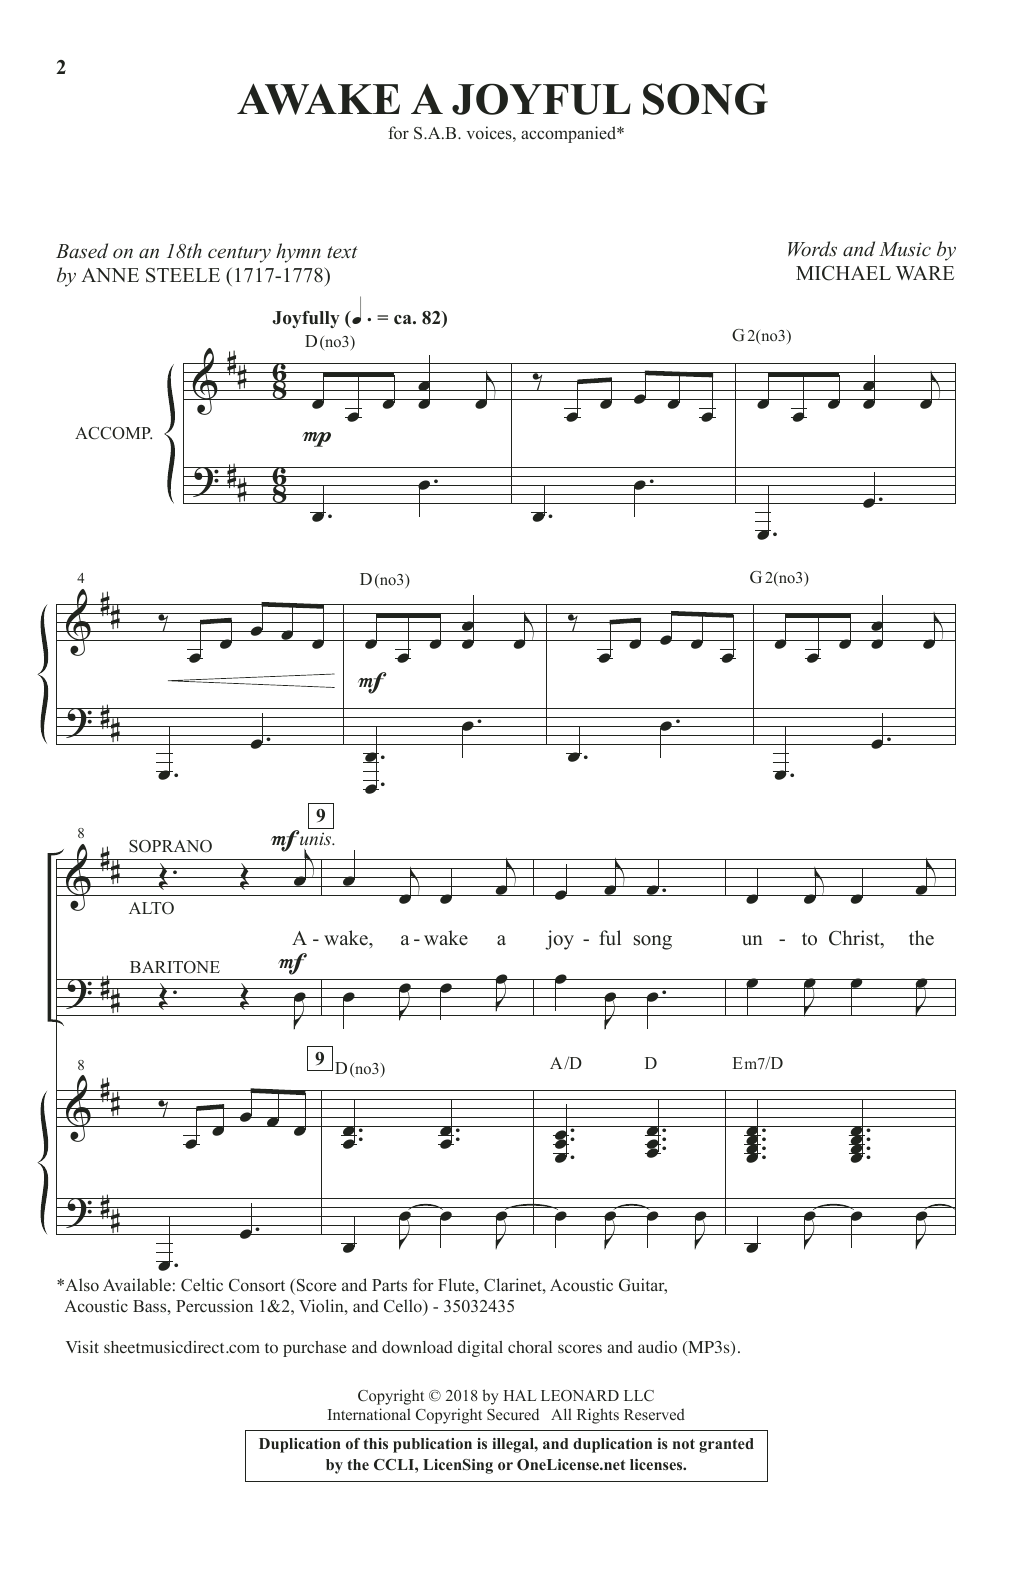 Joseph M. Martin Simple Songs for Slim Sundays, Volume 2 Sheet Music Notes & Chords for Choir - Download or Print PDF